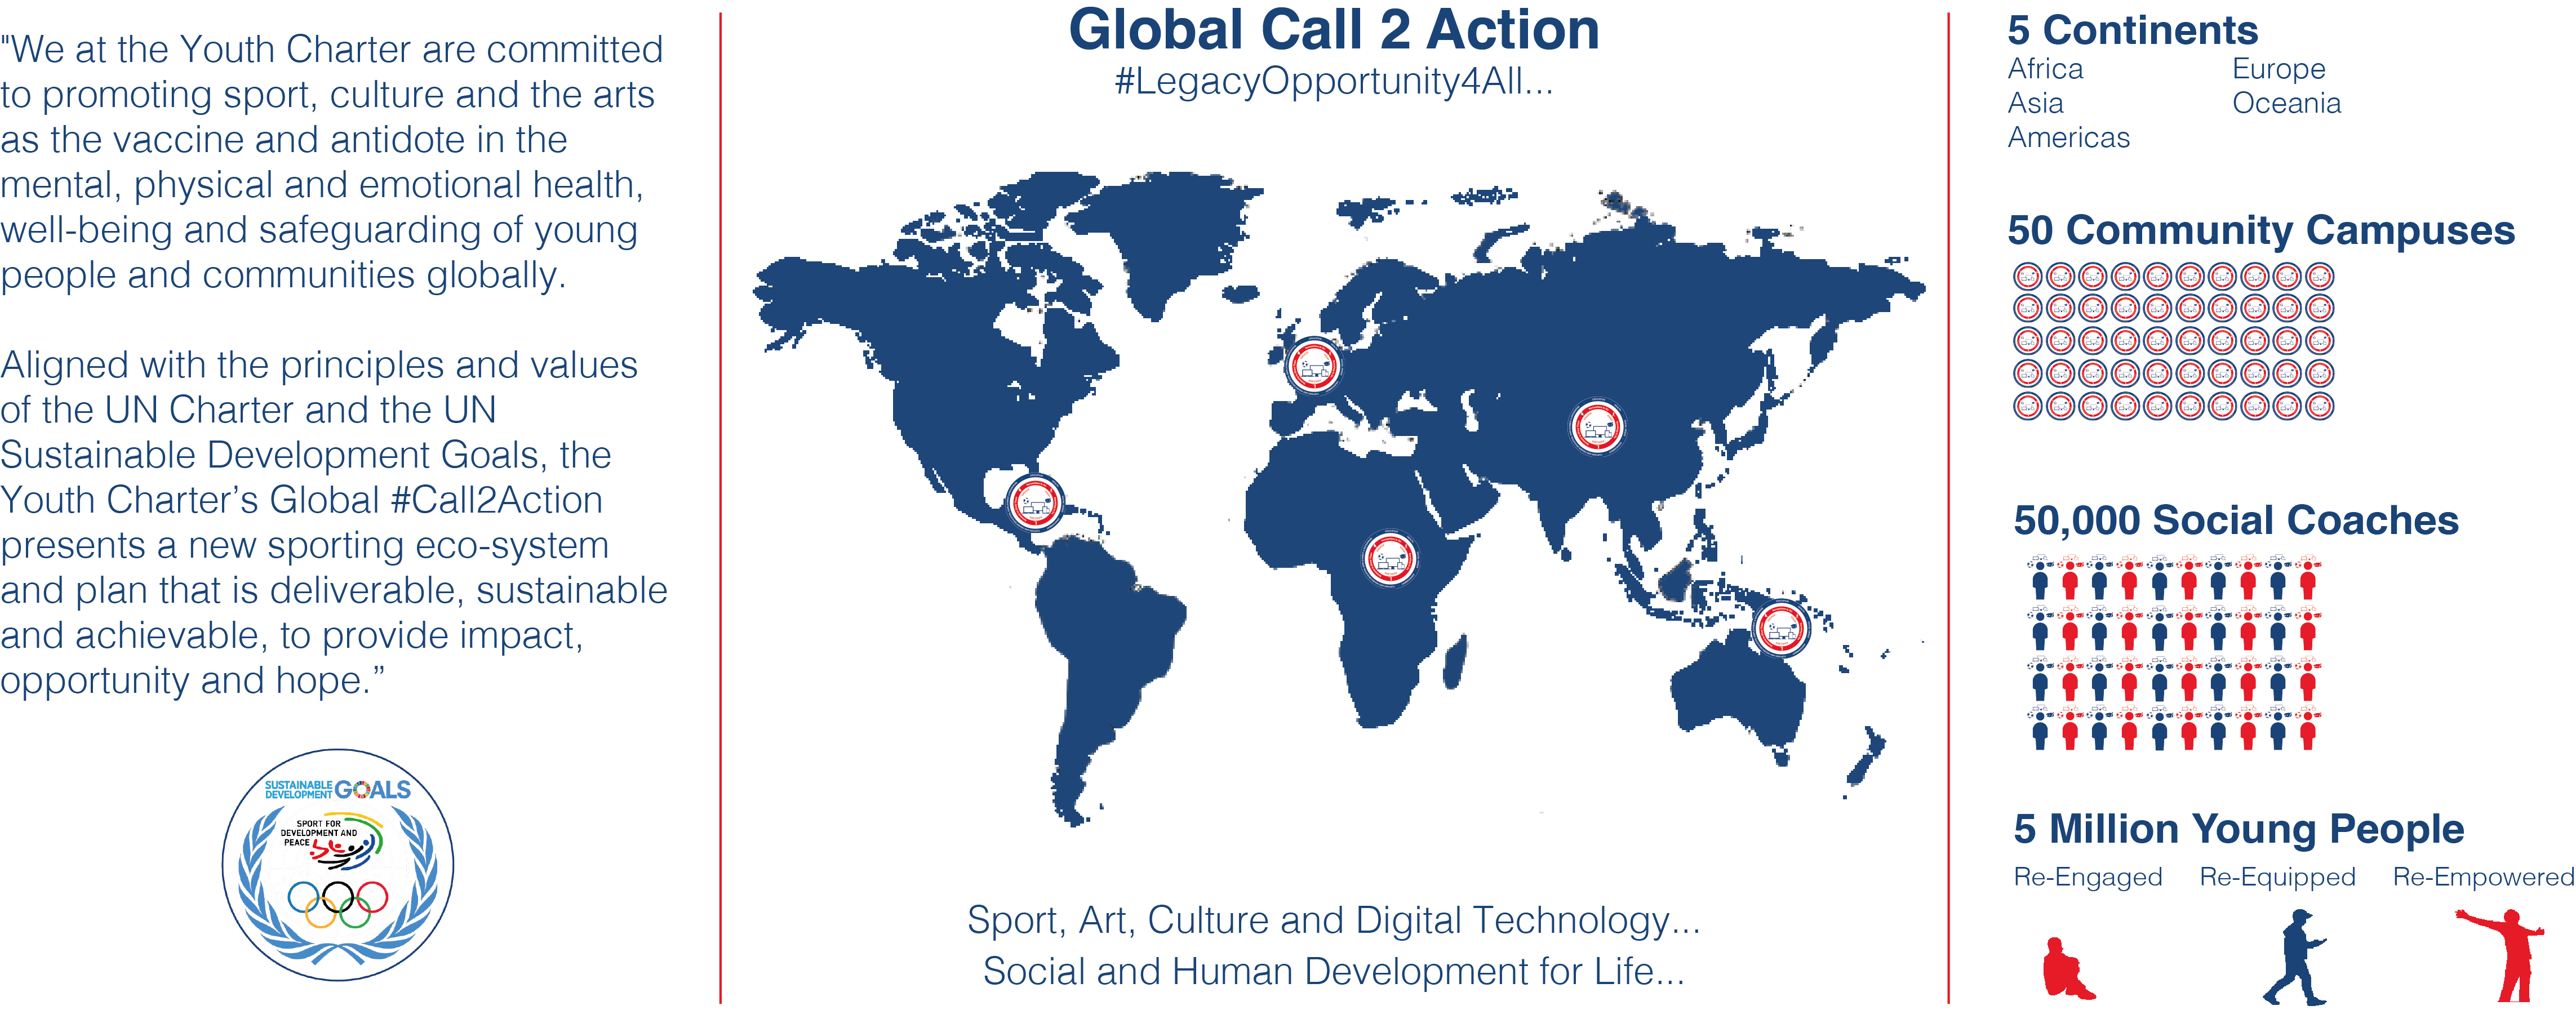 Global Call 2 Action